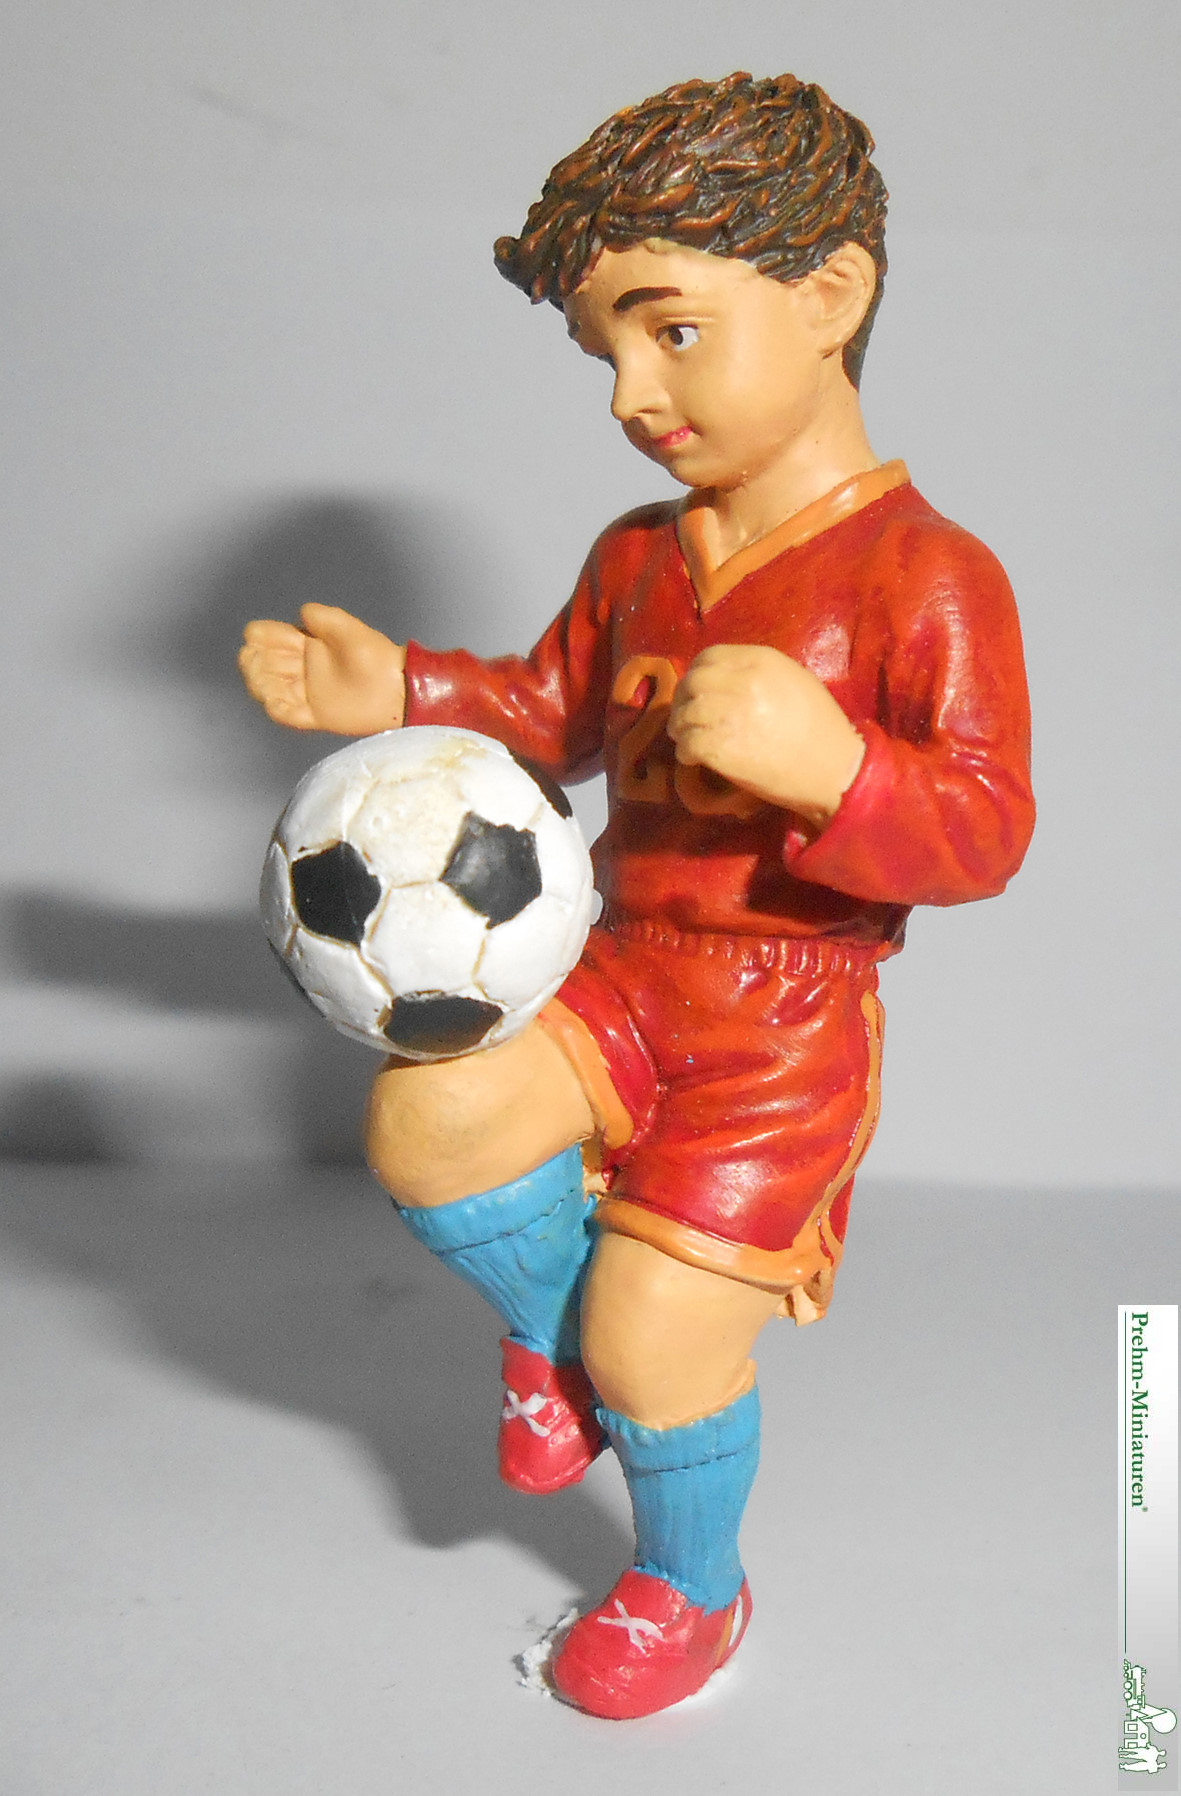 Artikel Nummer 550115 - Kinder spielen Fuball-  Unverb. Verkaufspreis: SET: 22,95 EUR p.St. 